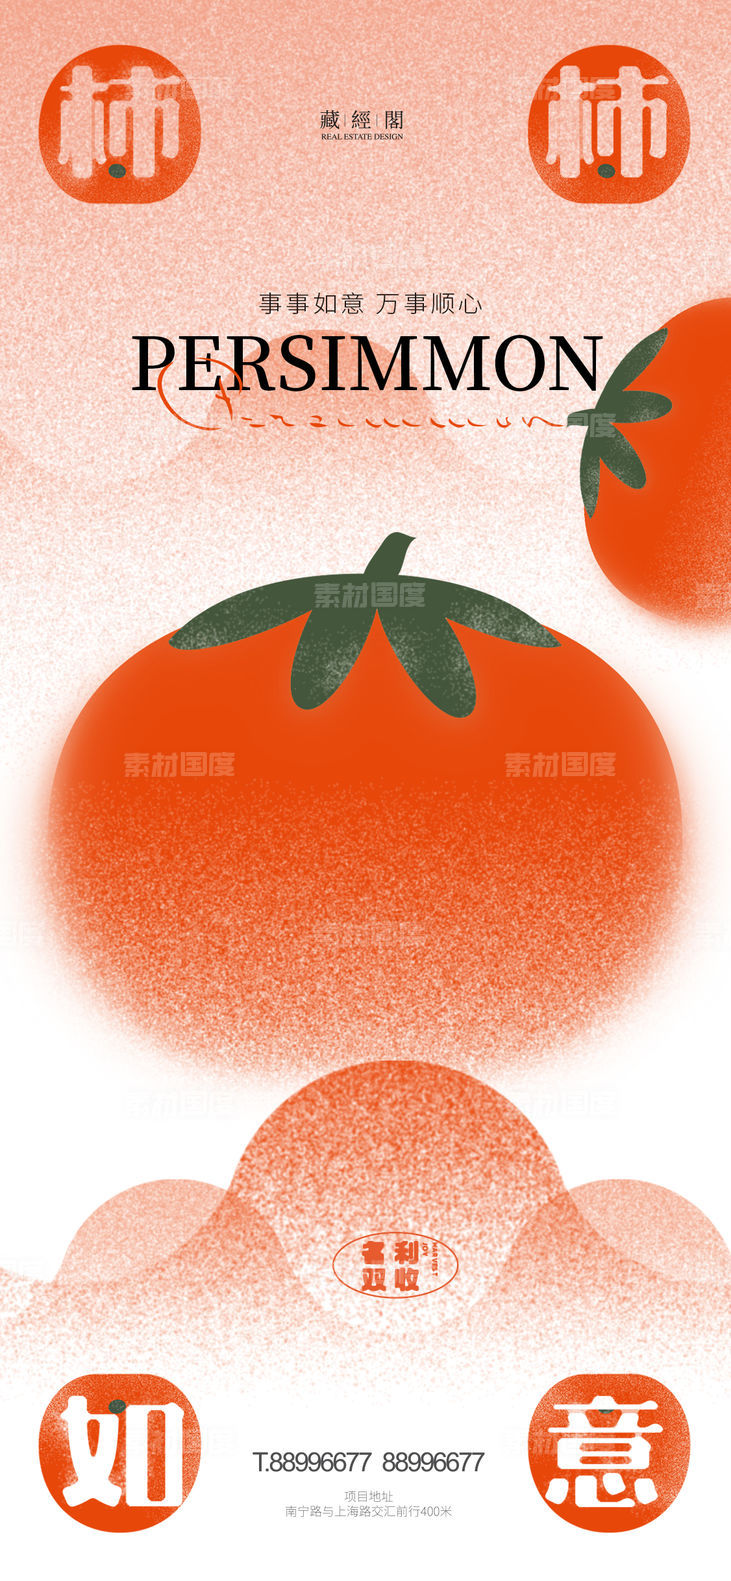 柿柿如意